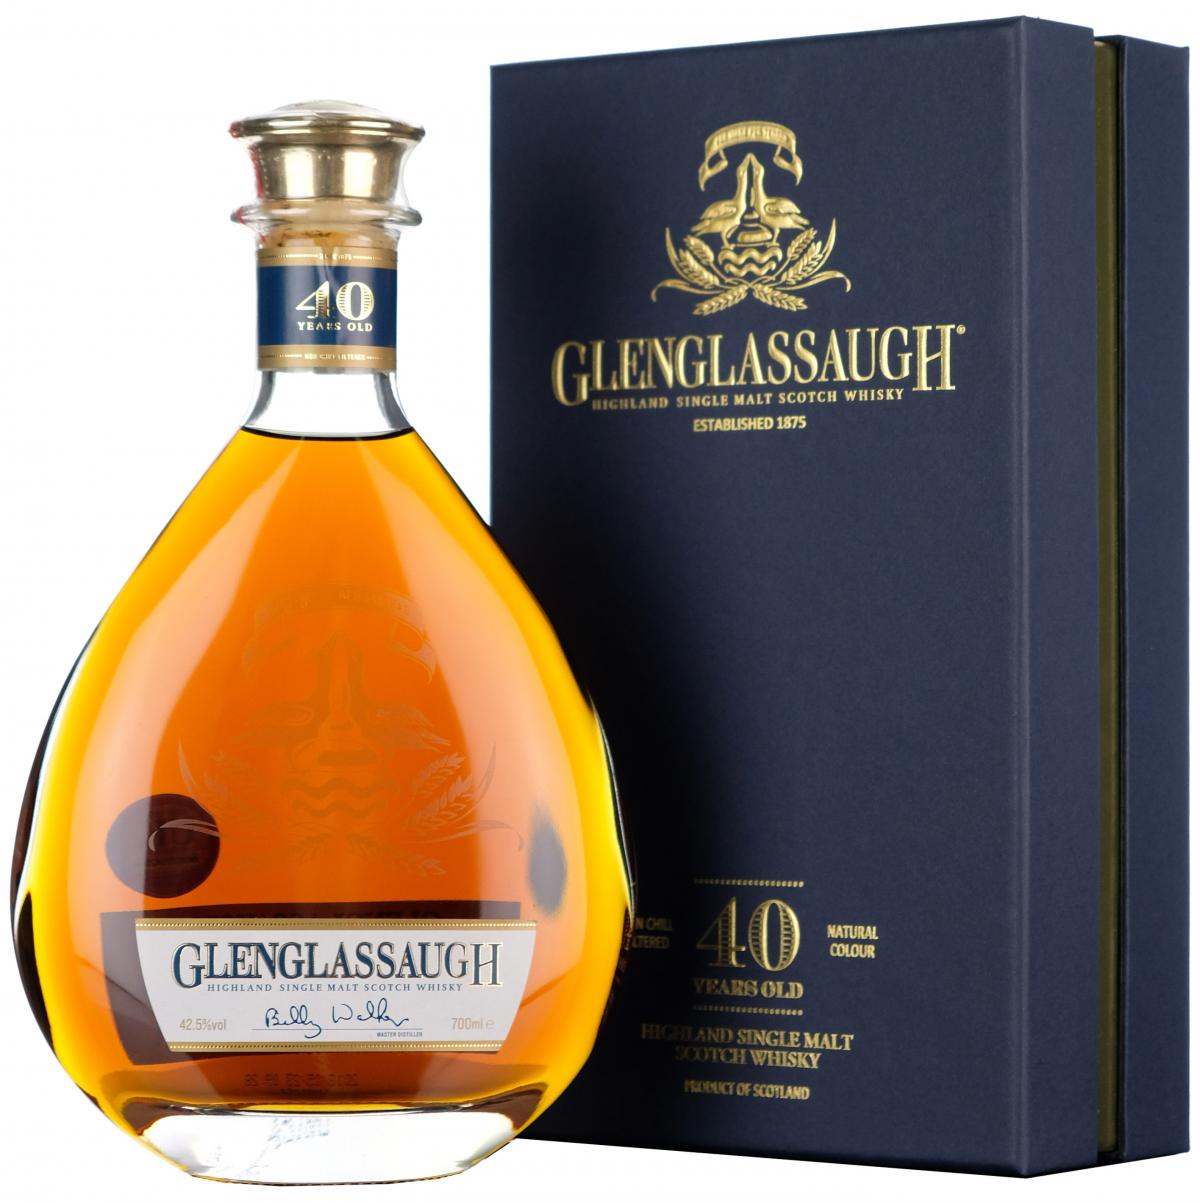 Glenglassaugh 40 Year Old